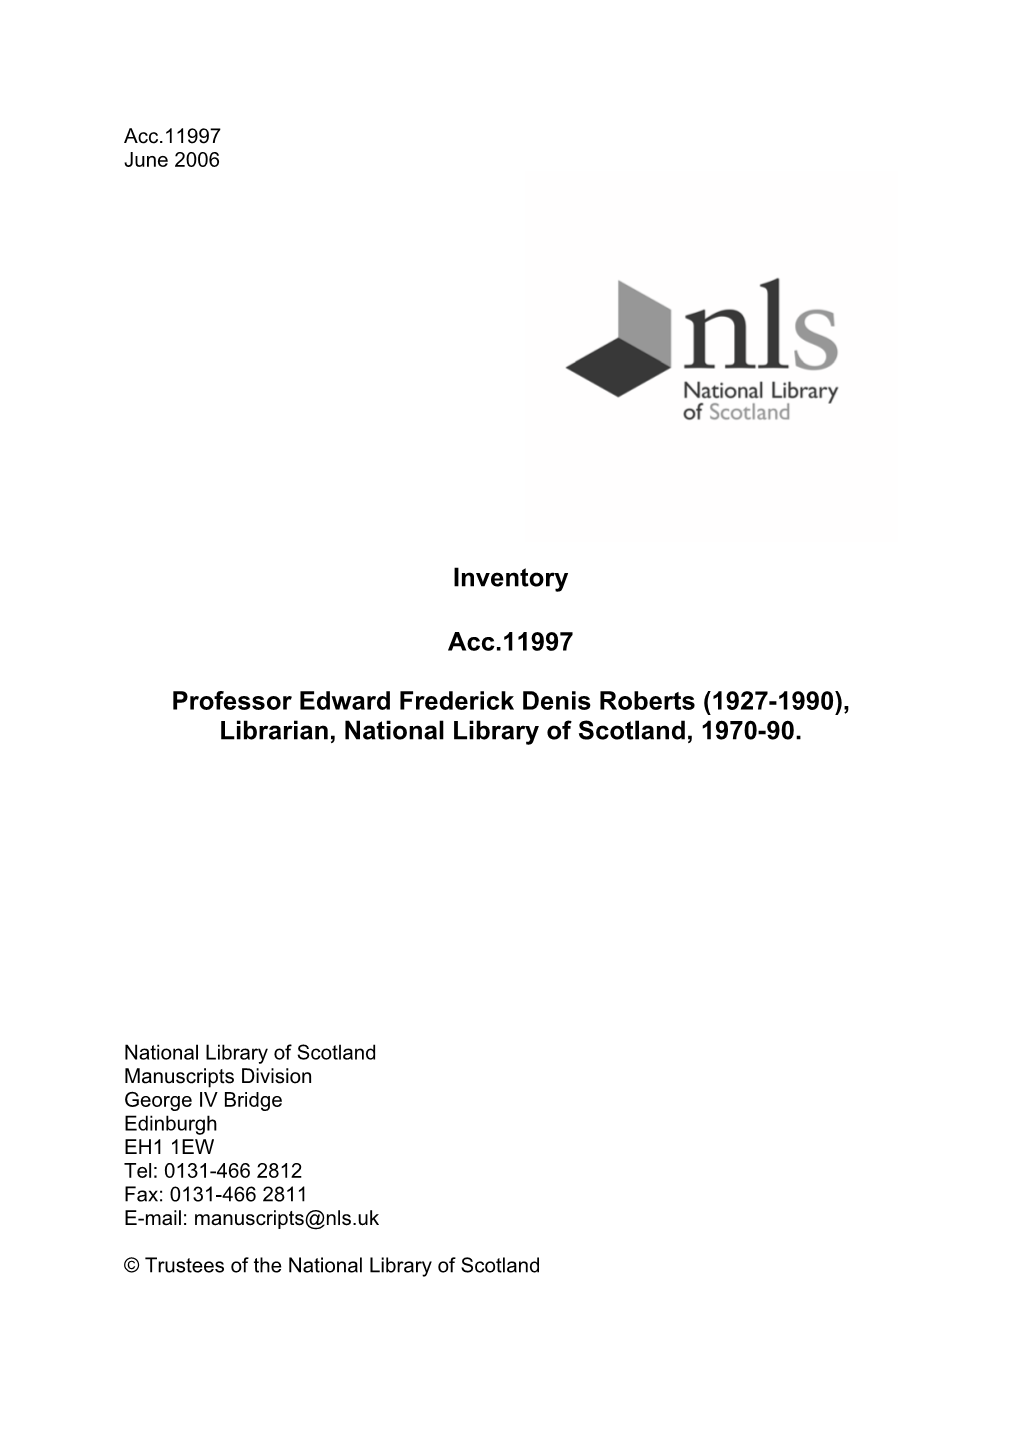 Inventory Acc.11997 Professor Edward Frederick Denis Roberts